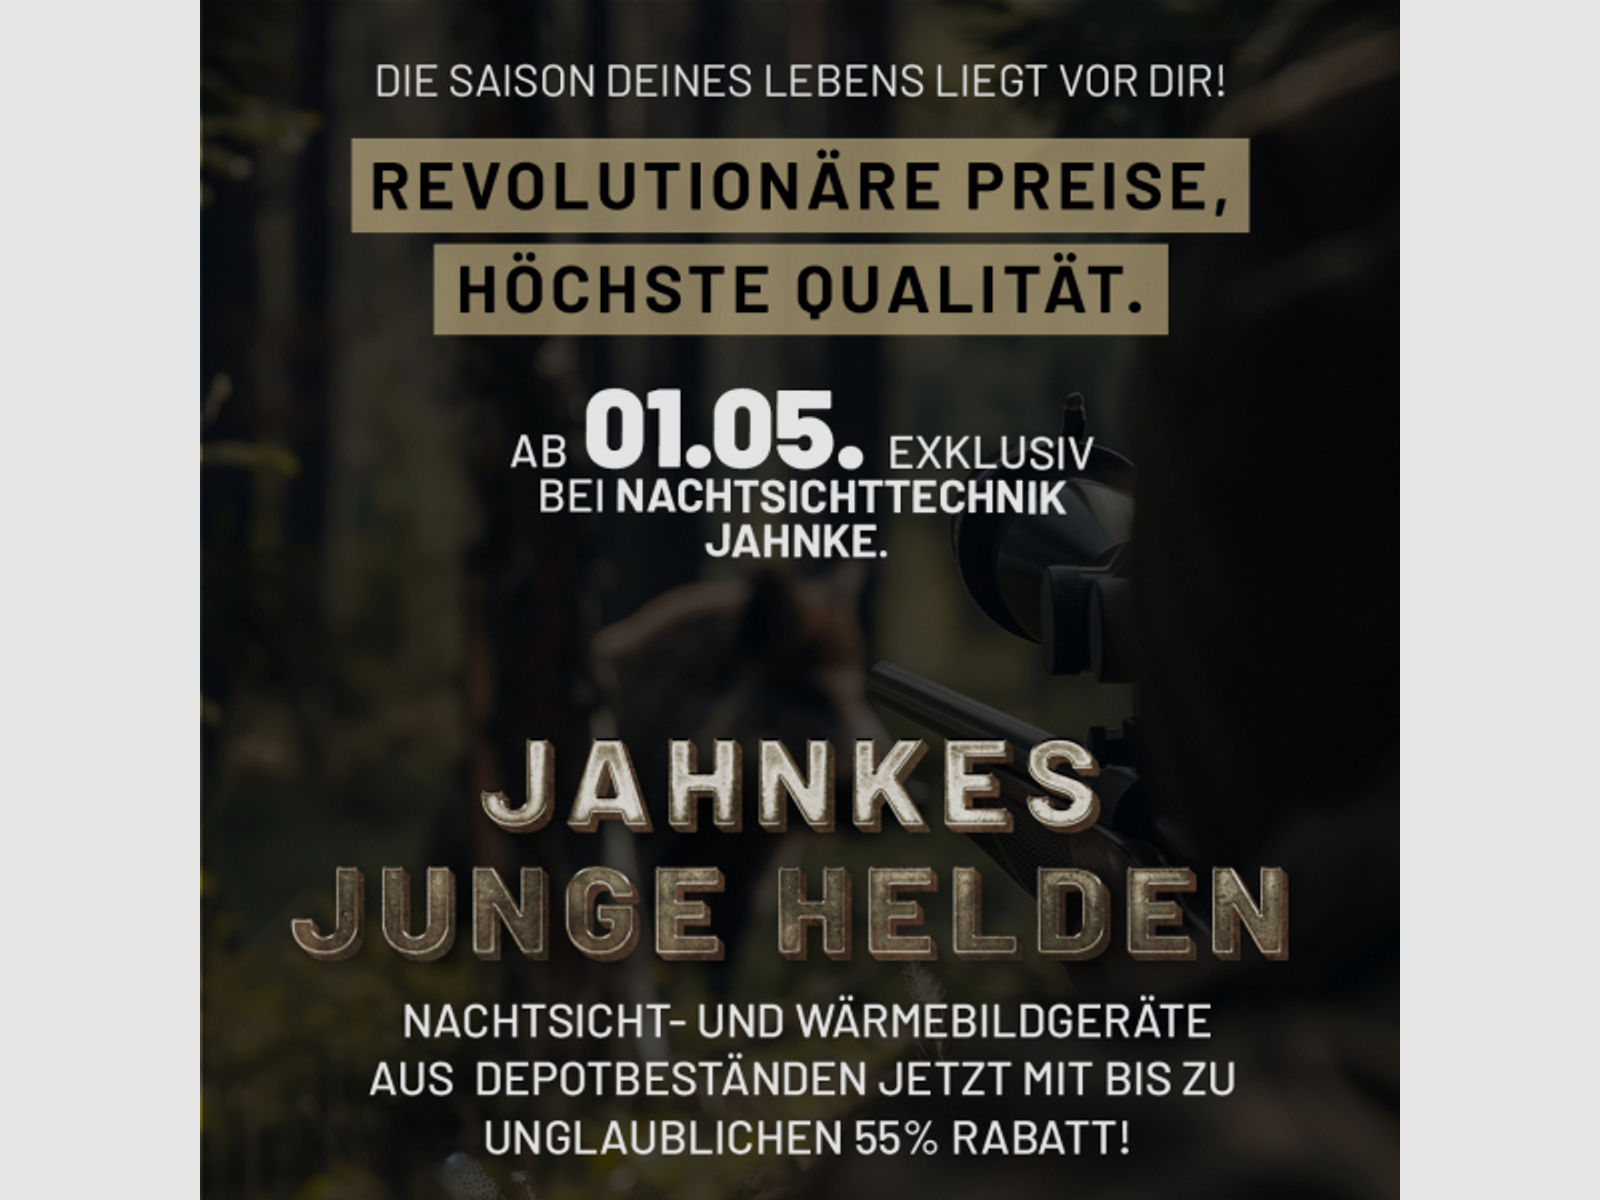 Nachtsichttechnik Jahnke DJ-8 7,5x58 JJH LK 3 S 1, Jahnke Monochrom (Grau)